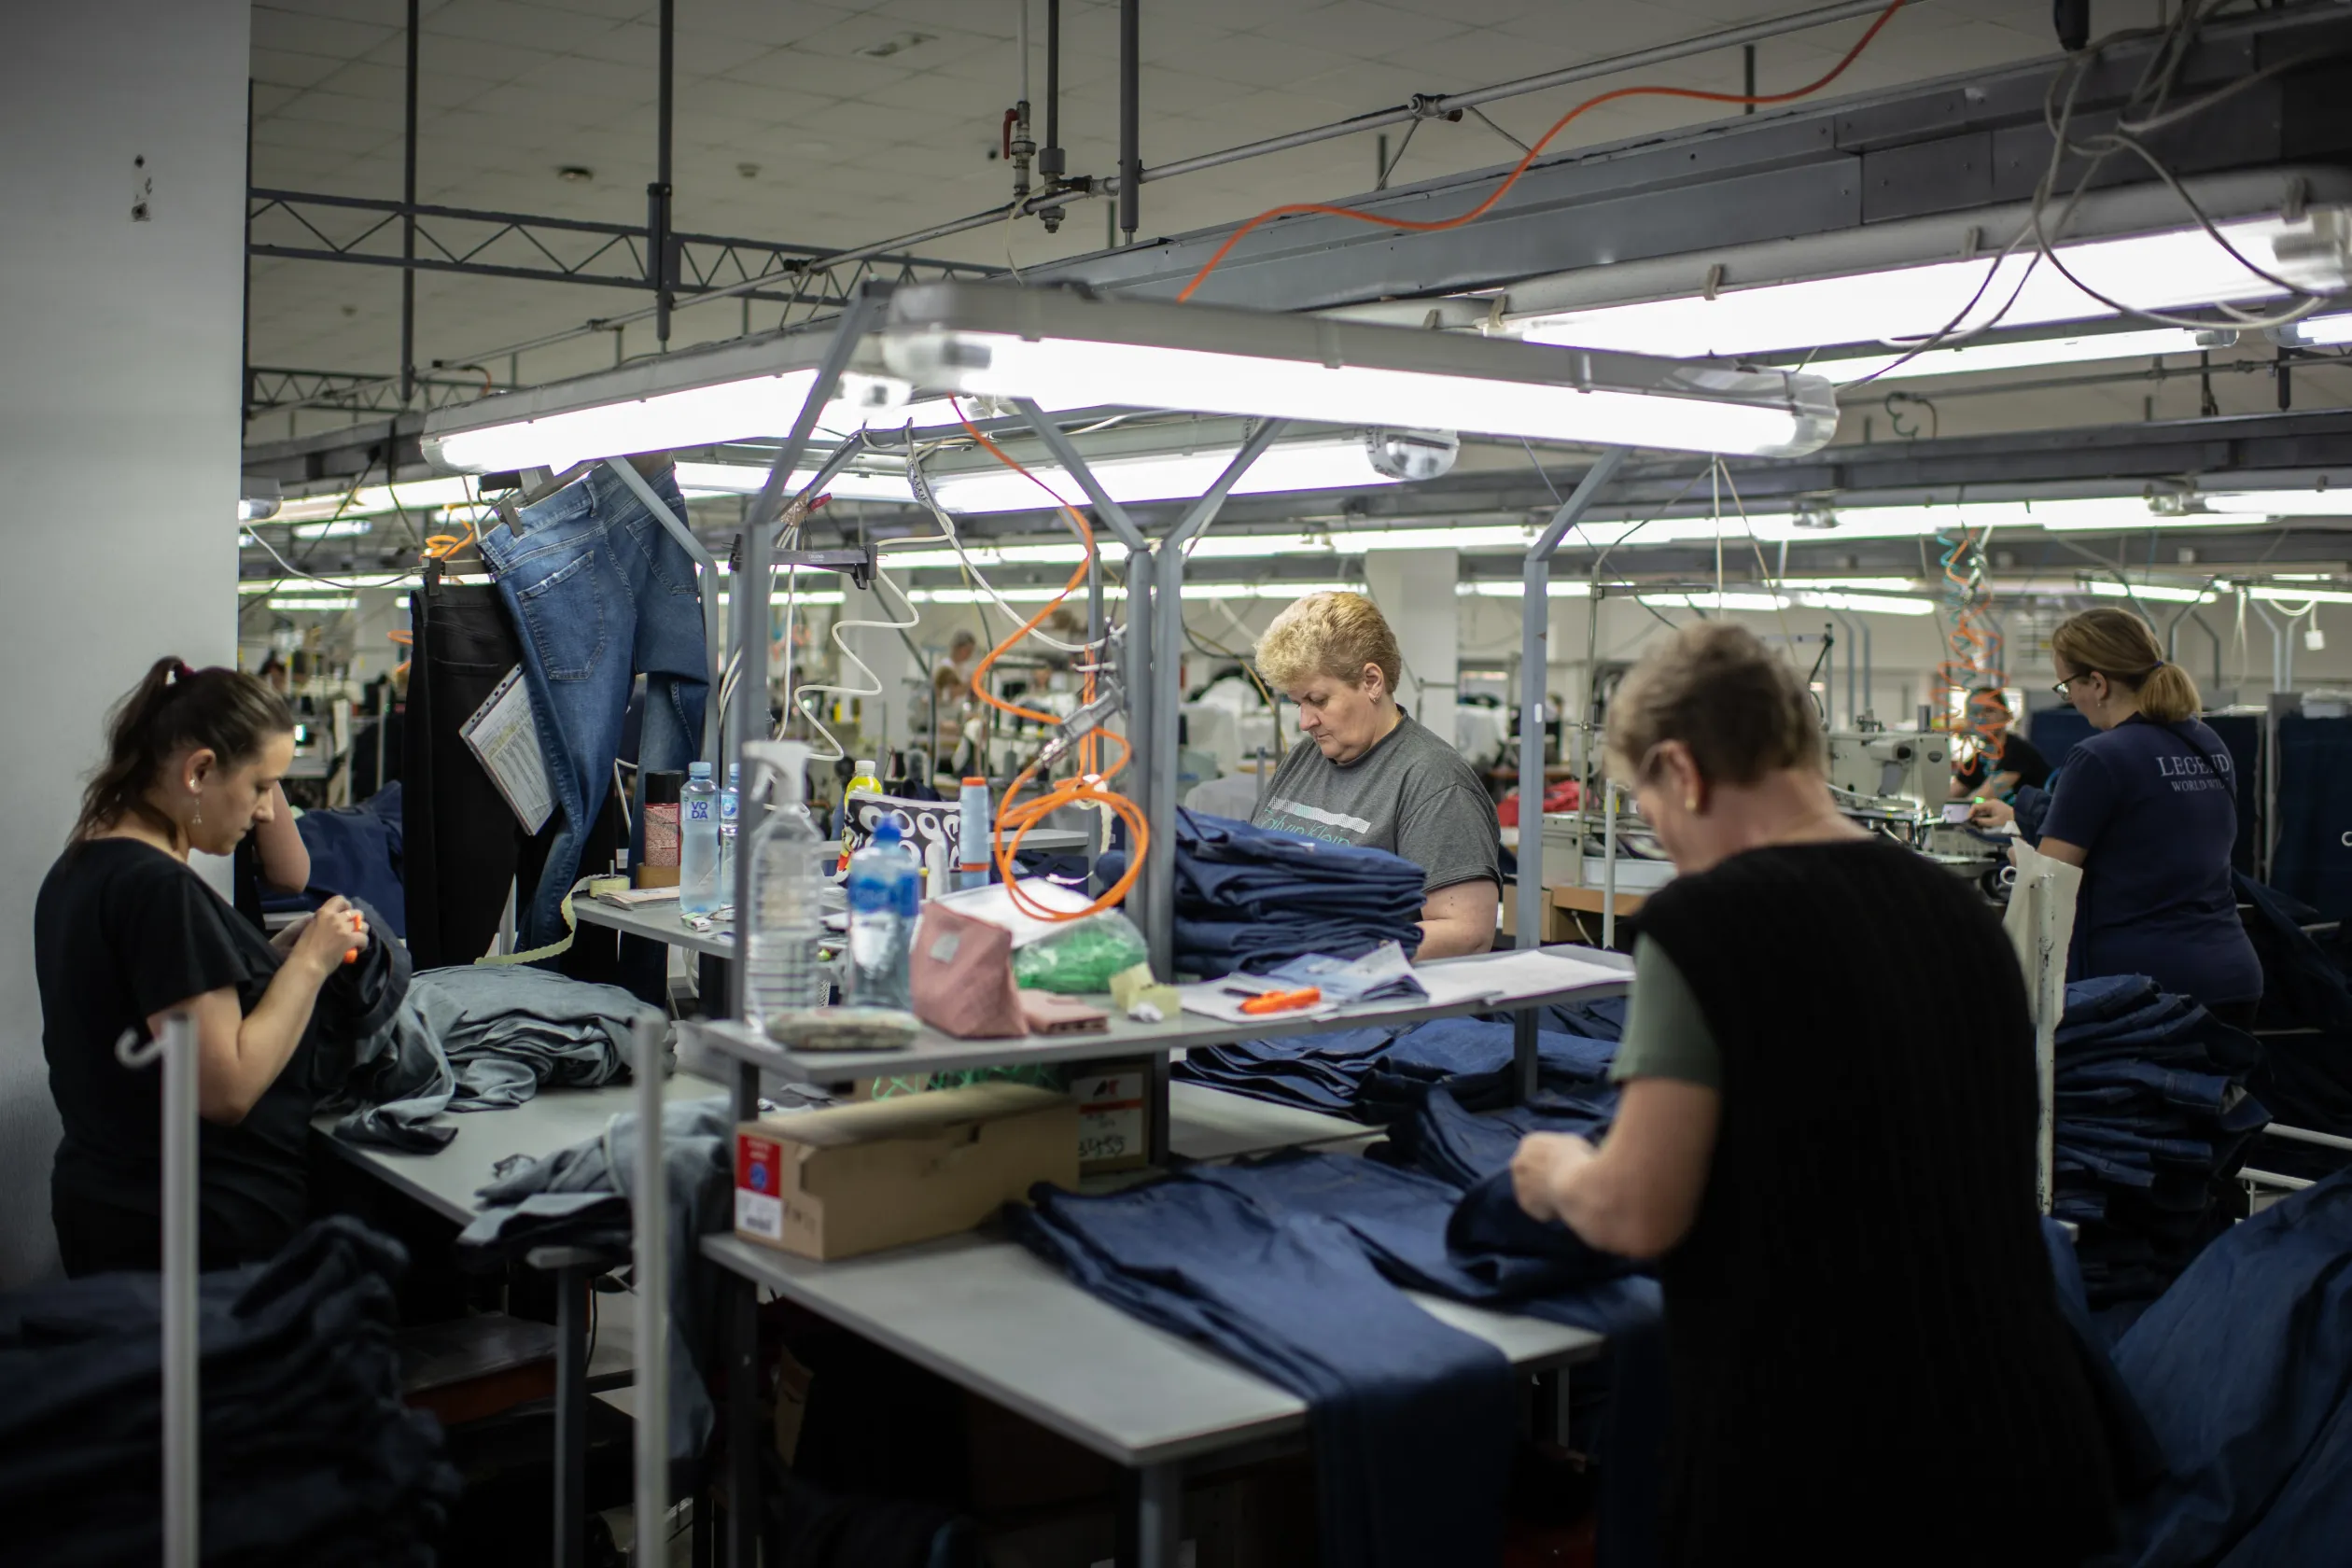 The Legend sewing company in Subotica, Serbia – Photo by János Bődey / Telex